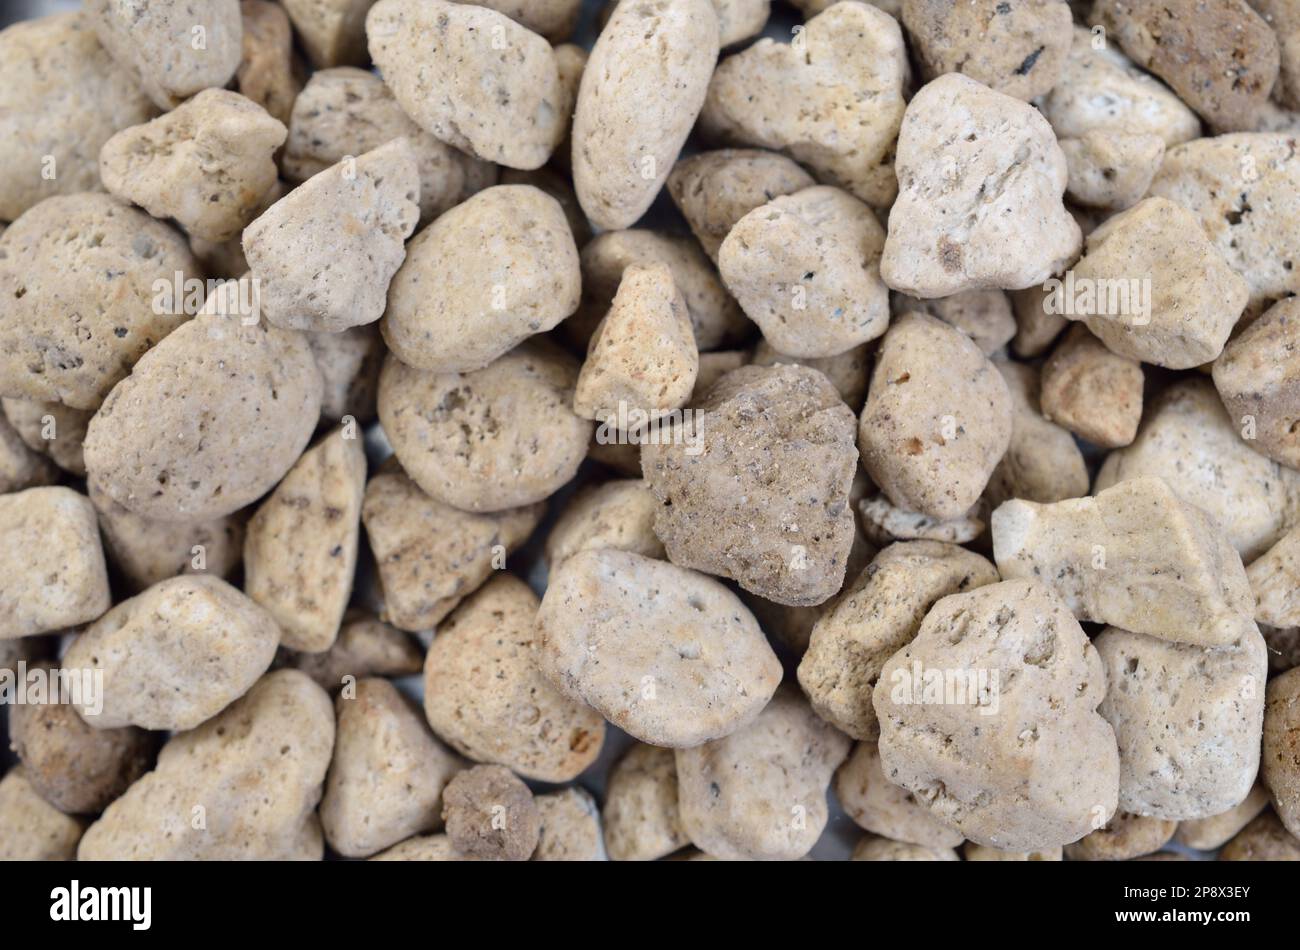 Porous grey volcanic rock. Lava stone, pumice stone, or volcanic pumice with distinctive pores Stock Photo